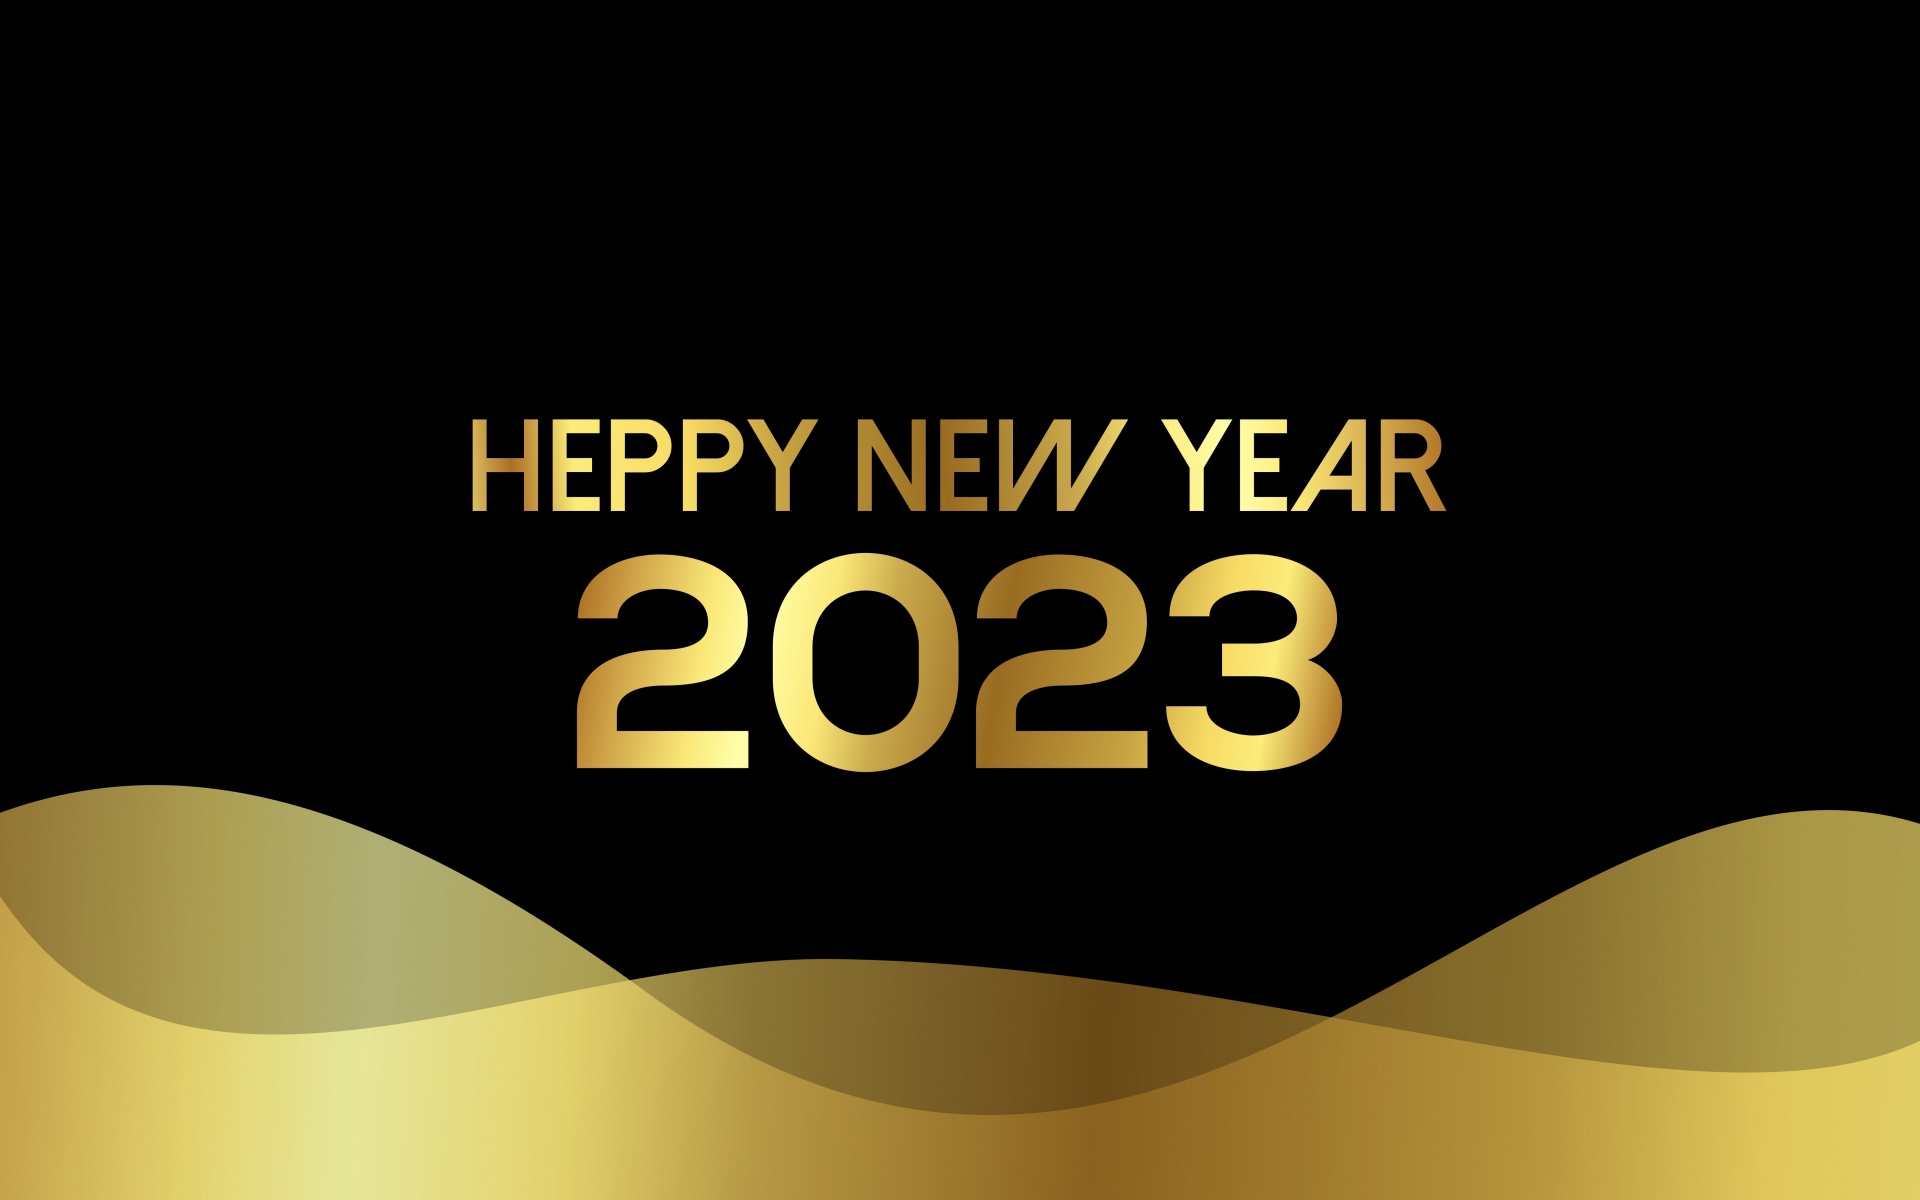 Happy New Year 2023 Wallpaper 4K, 2023 New Year, Celebrations New Year